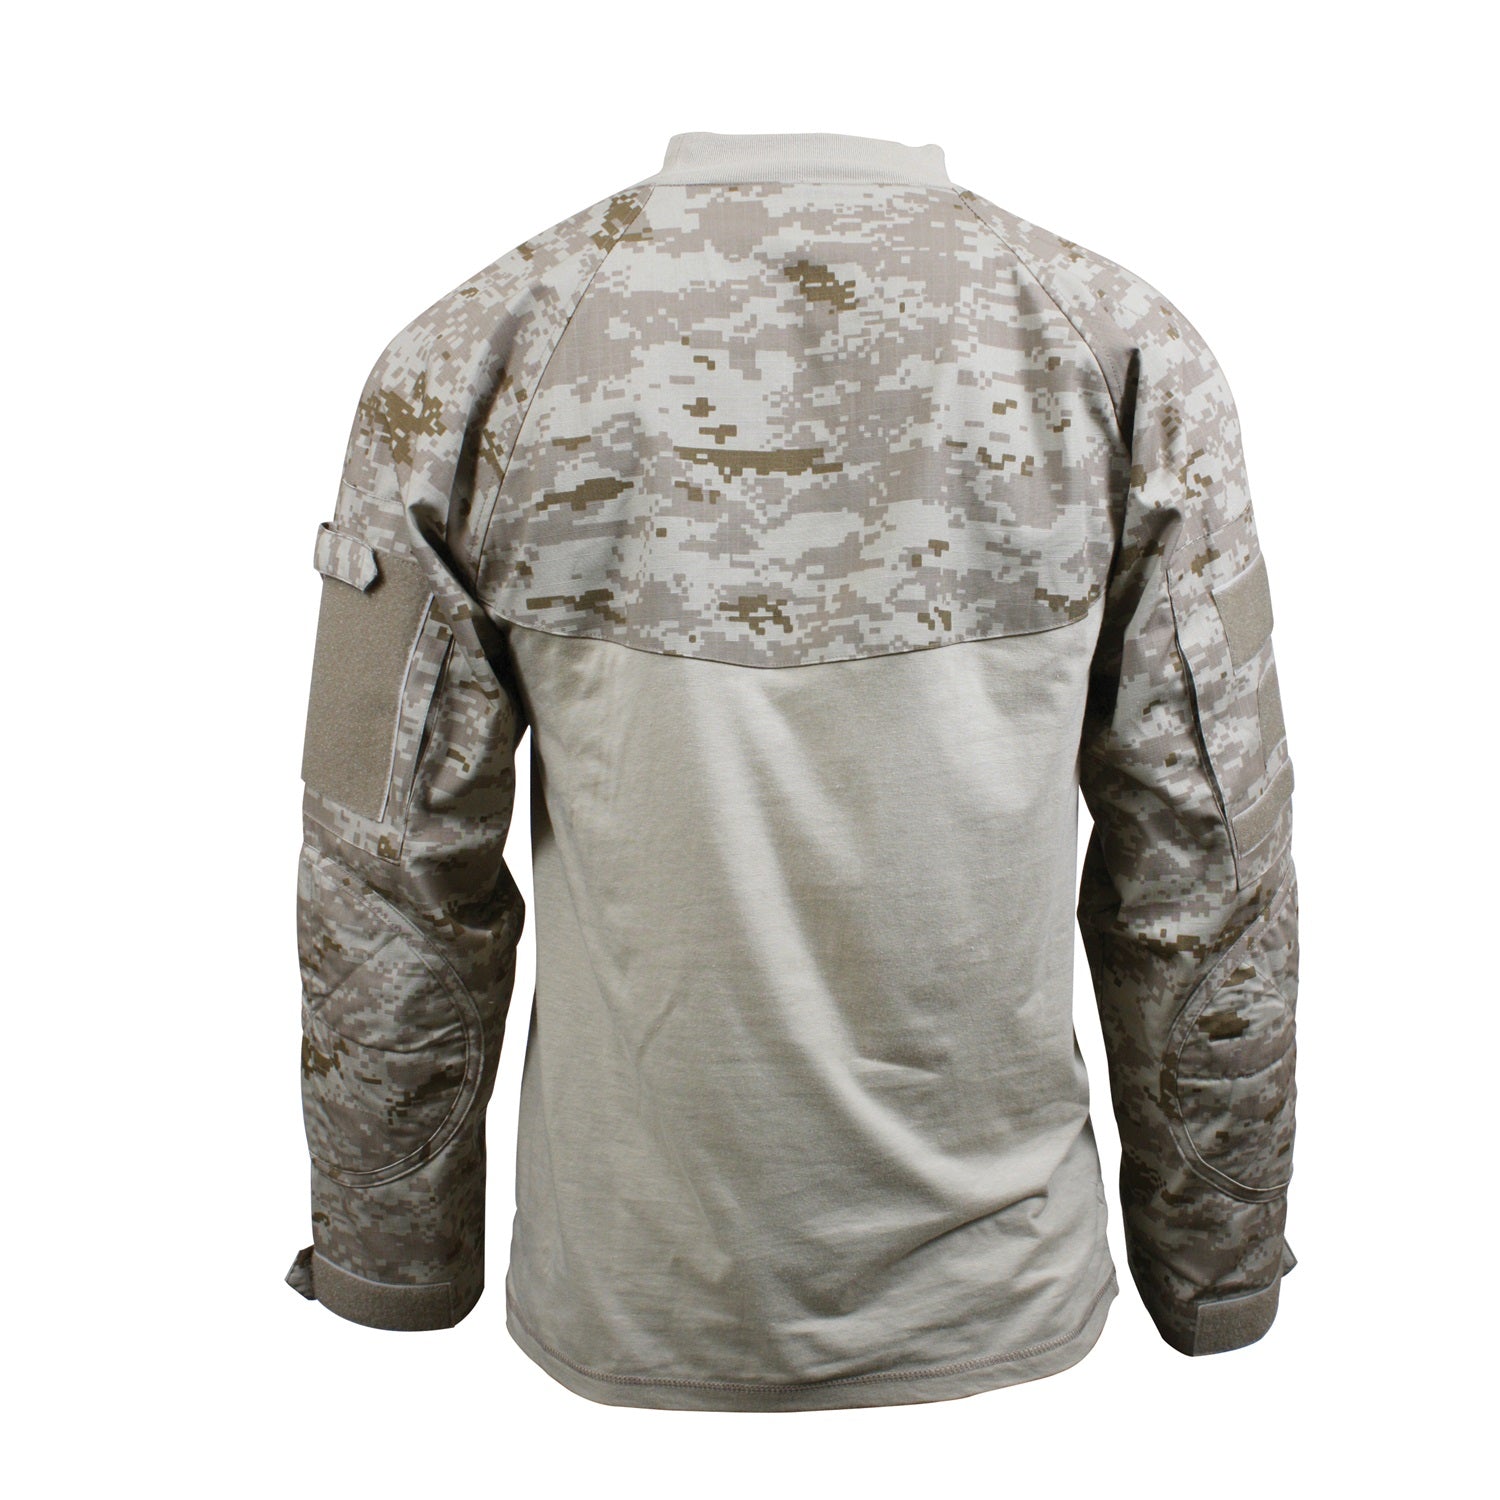 CLEARANCE - Rothco Military NYCO FR Fire Retardant Combat Shirt